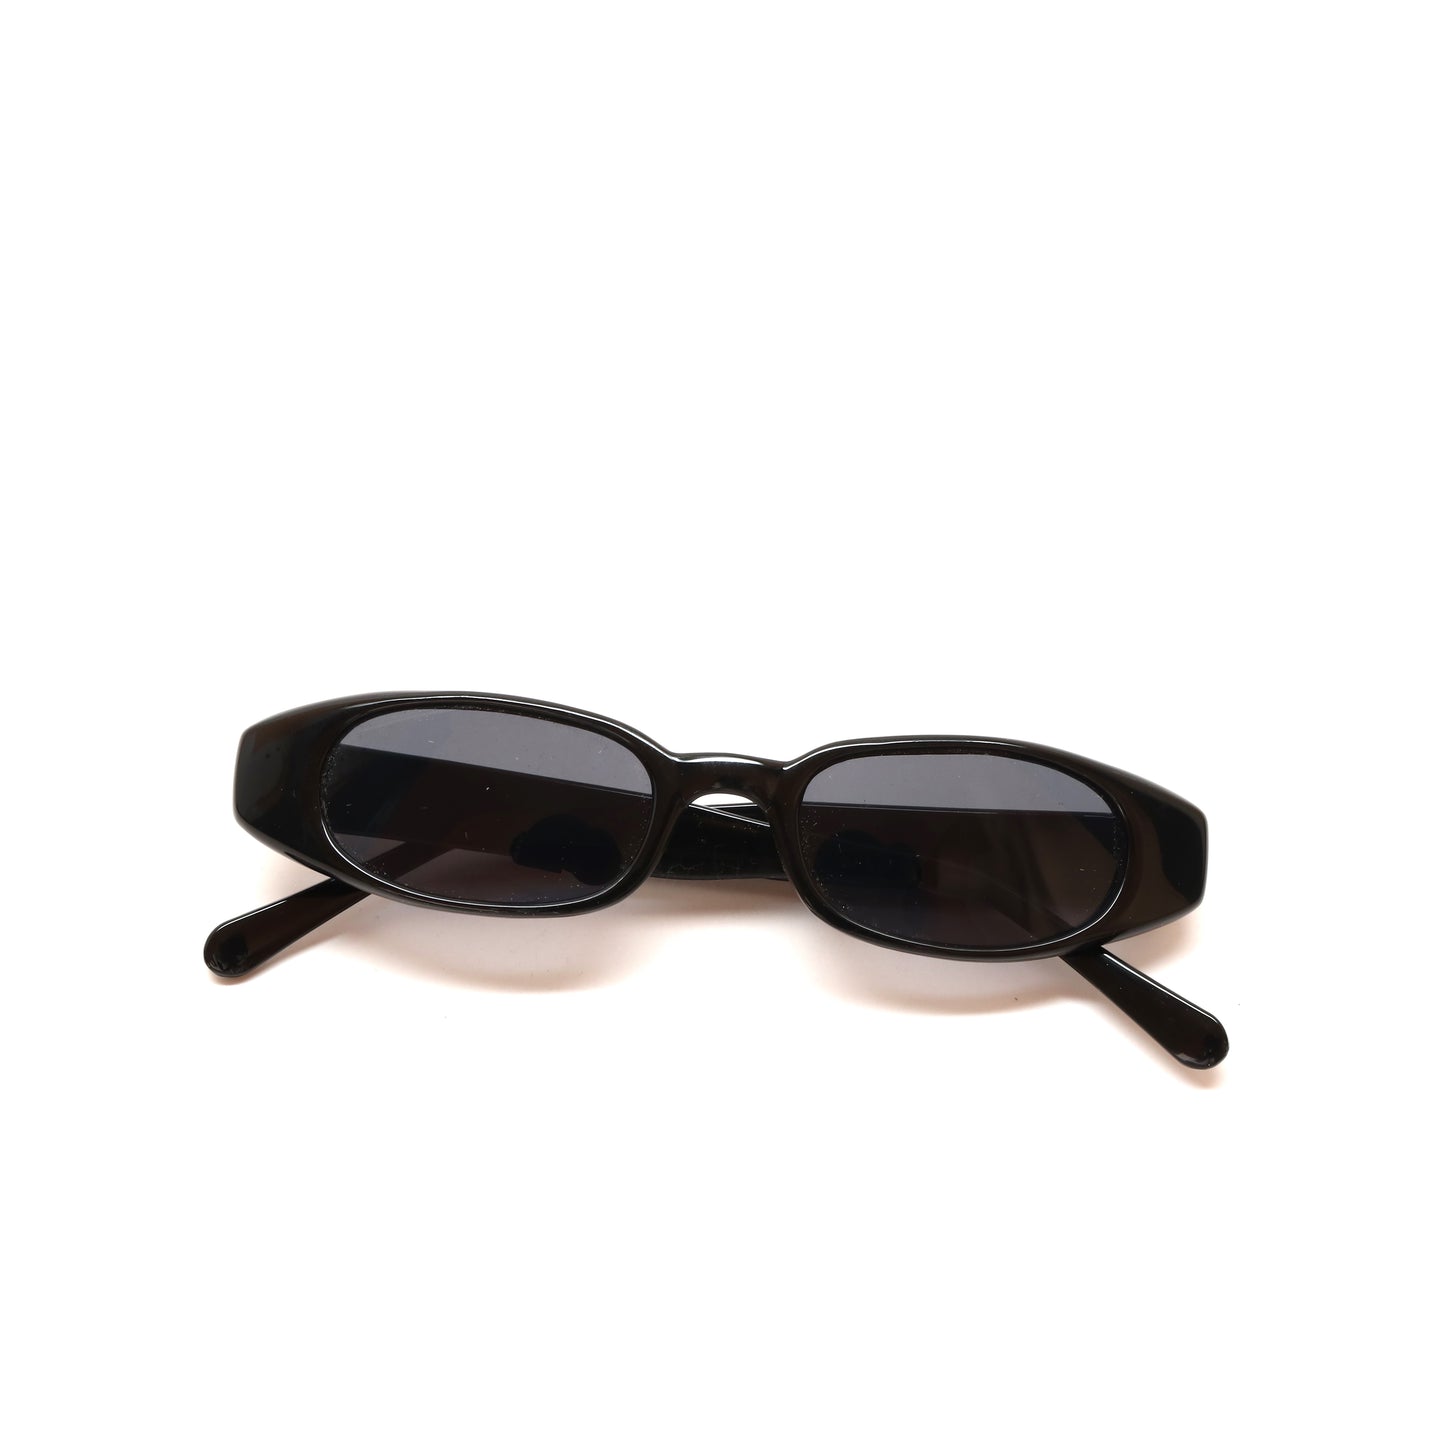 Vintage 90s New Old Stock Slim Narrow Frame Sunglasses - Black